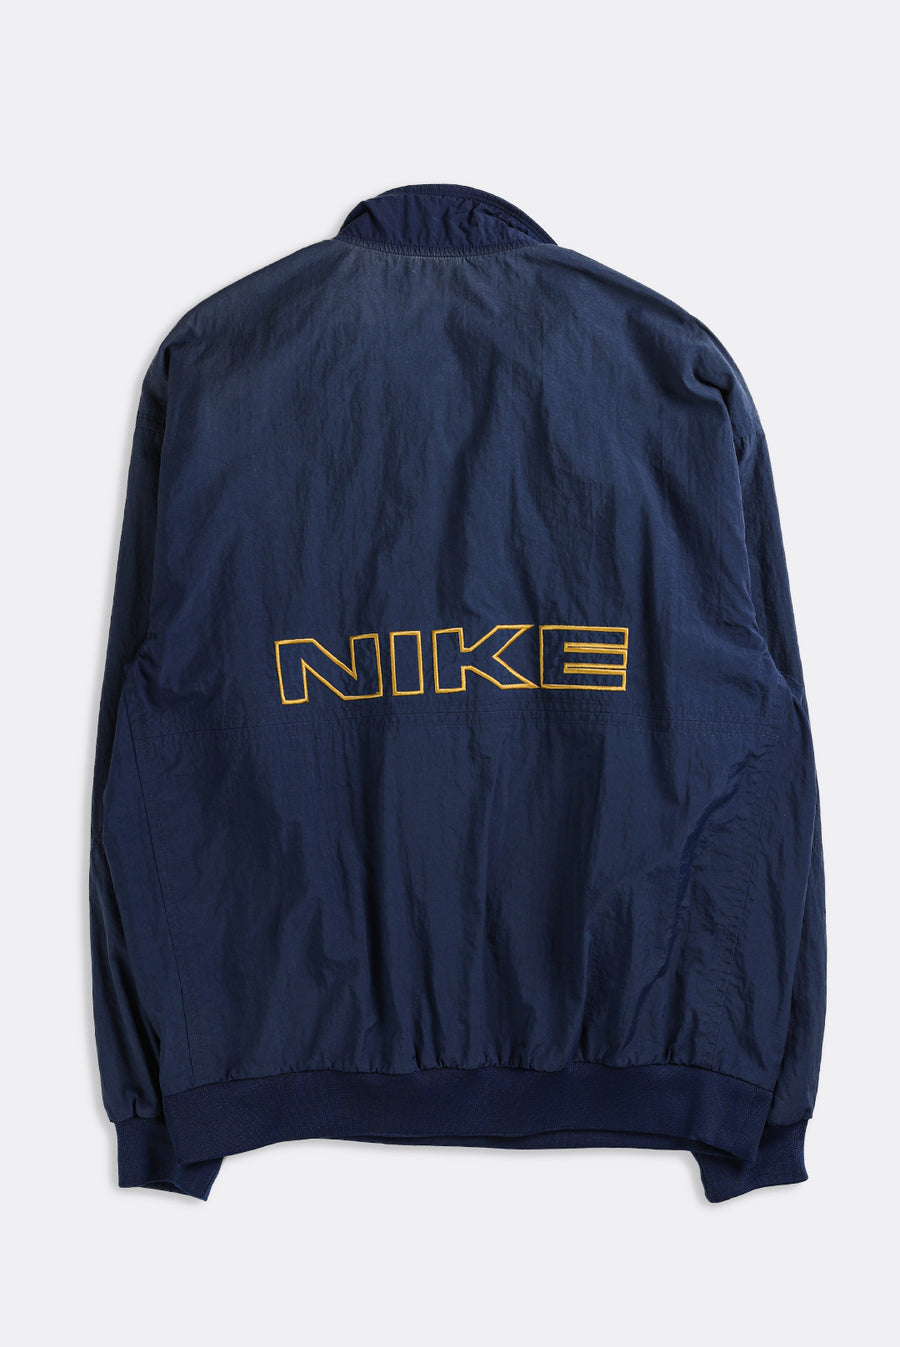 Vintage Nike Windbreaker Jacket